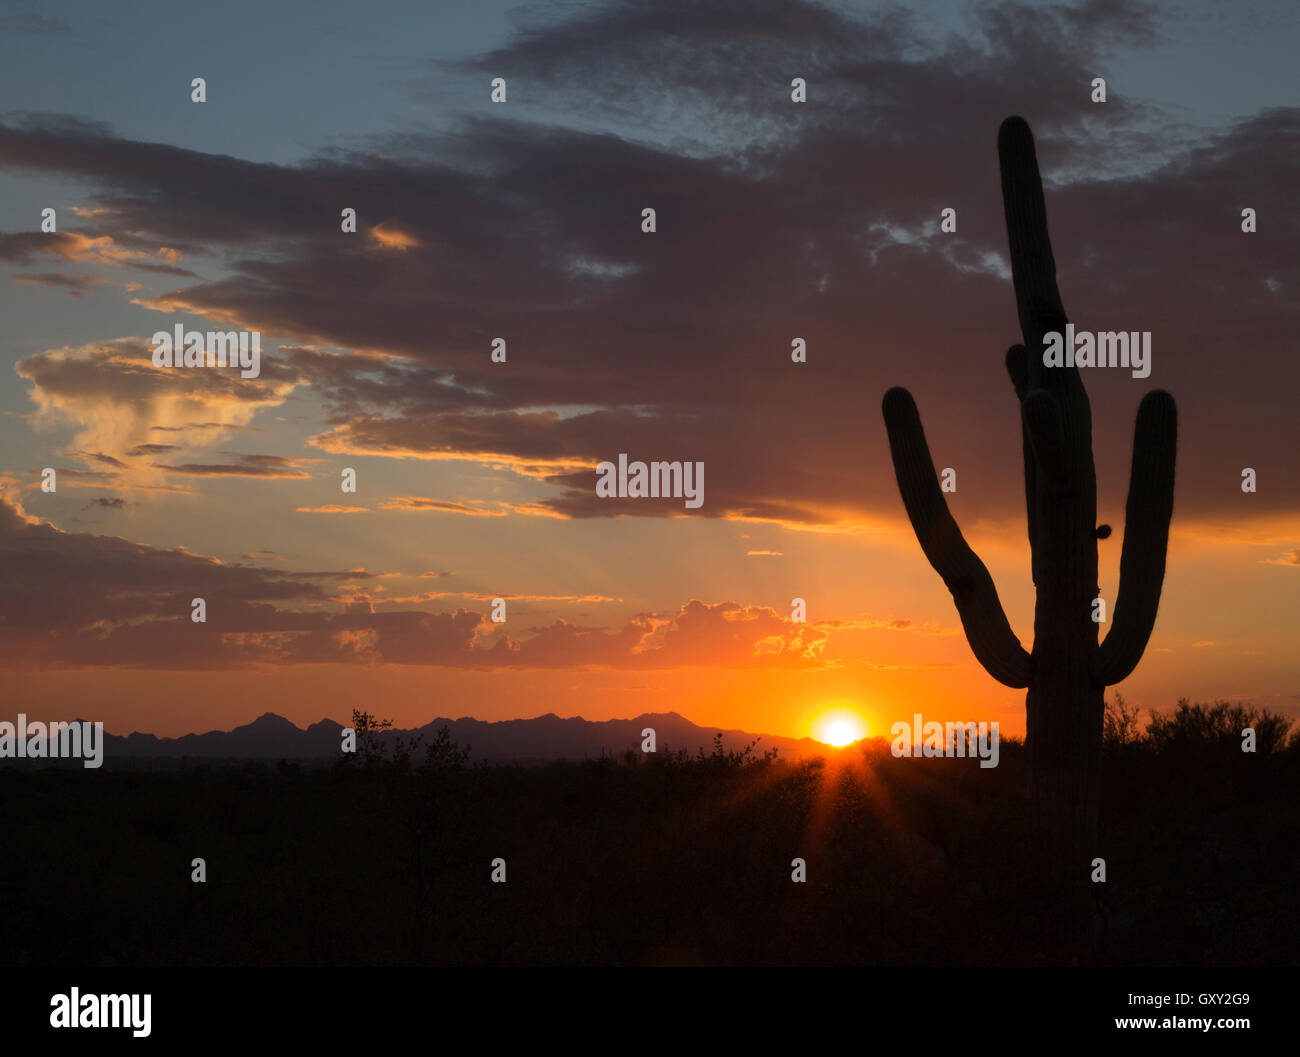 Saguaro cacti at night hi-res stock photography and images - Alamy